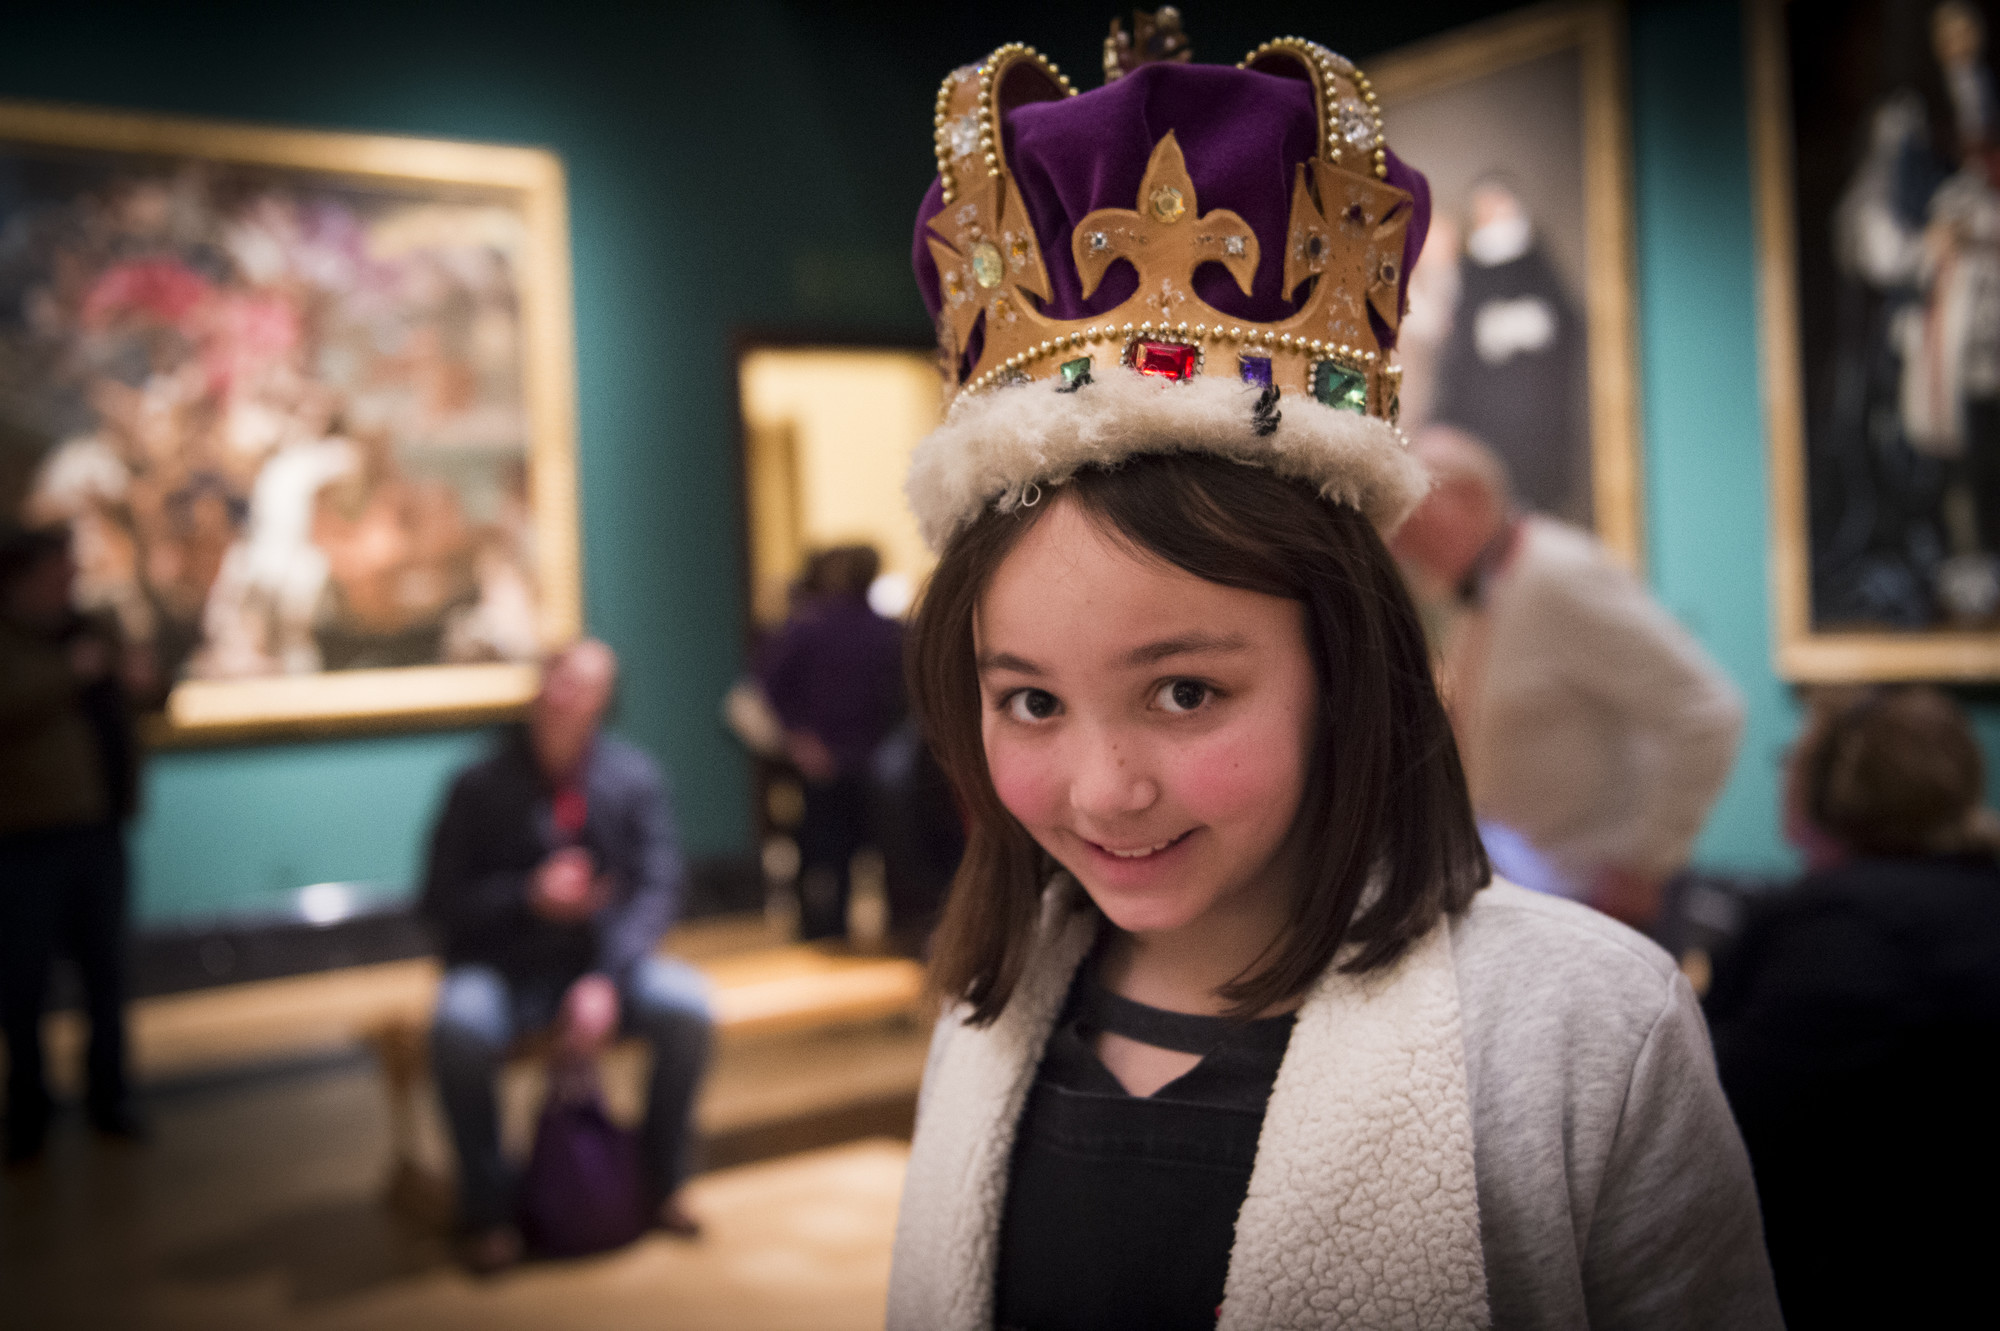 A girl is wearing a crown in an art gallery